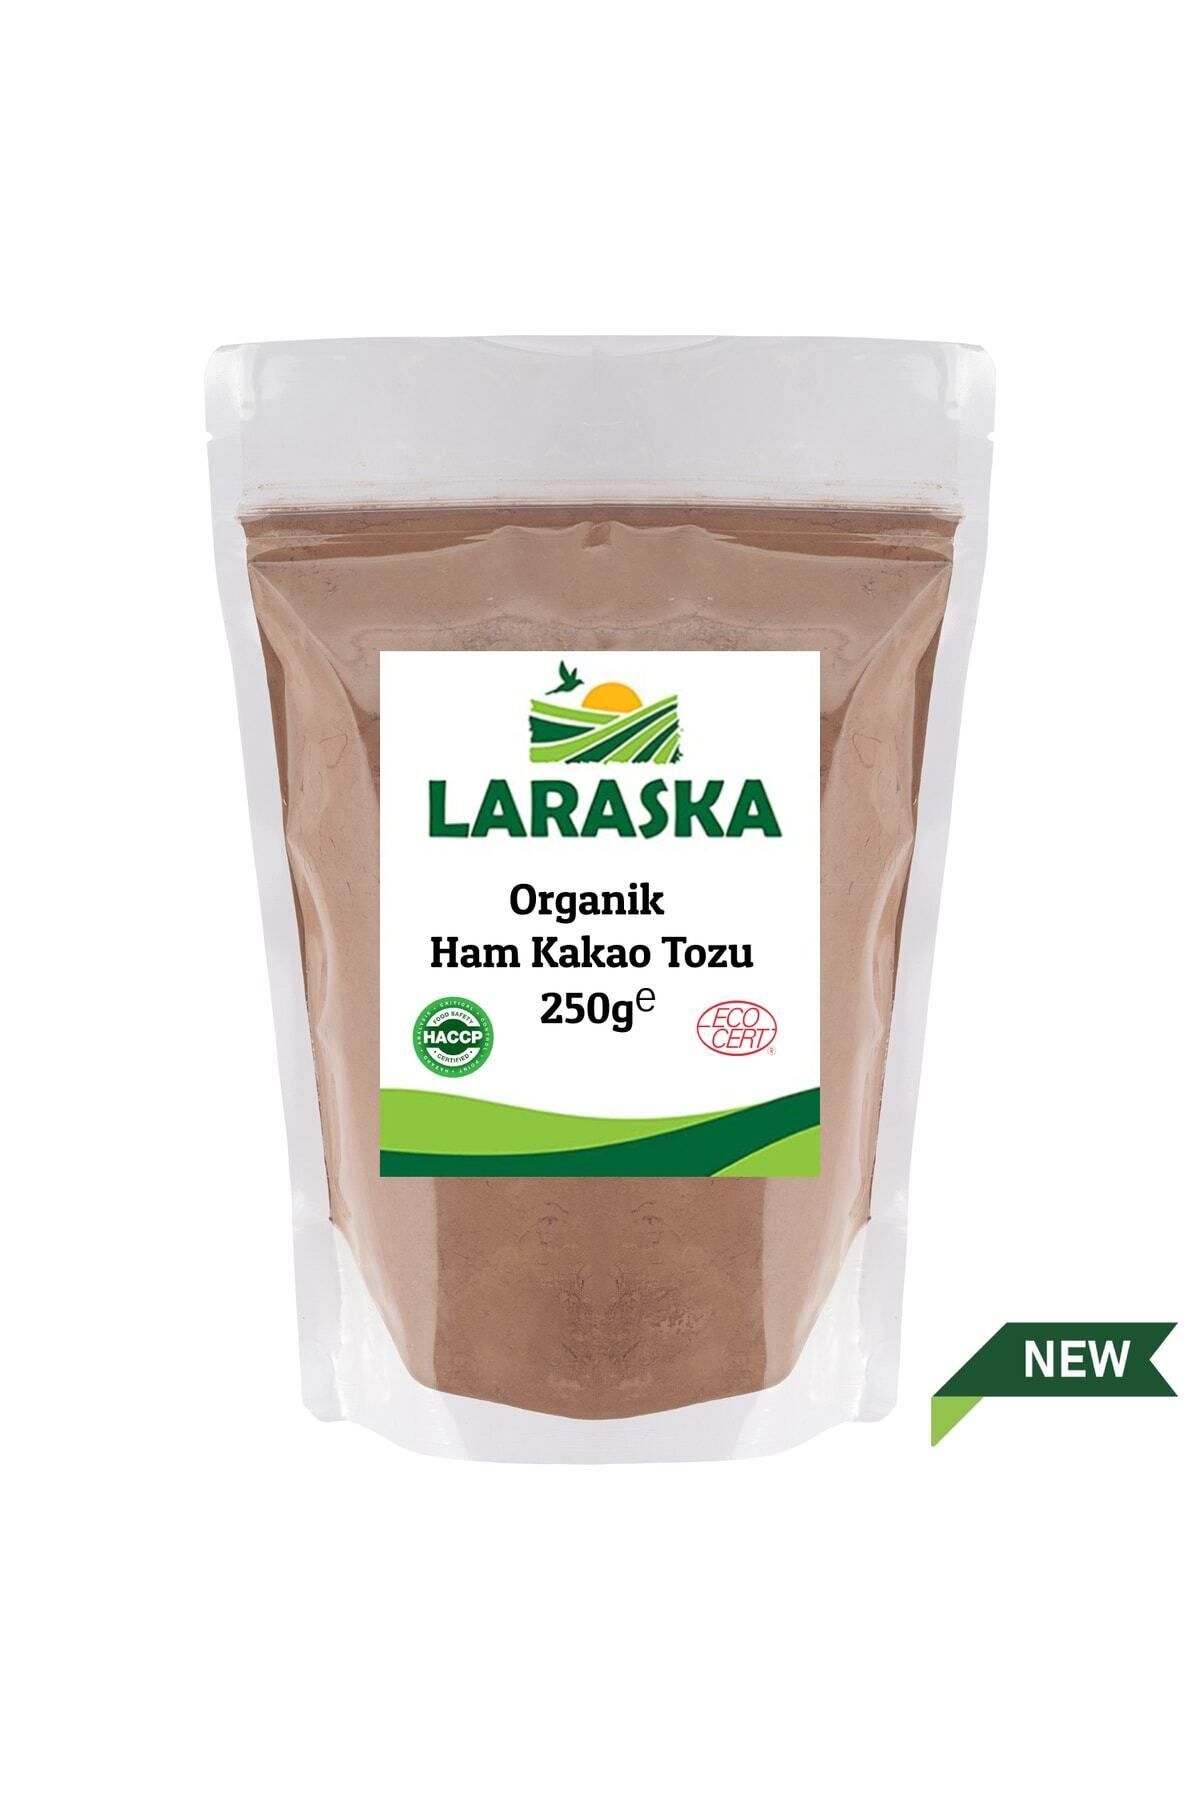 Laraska Organik Organik Ham Kakao Tozu 250g - Certified Organic Raw Cacao Powder